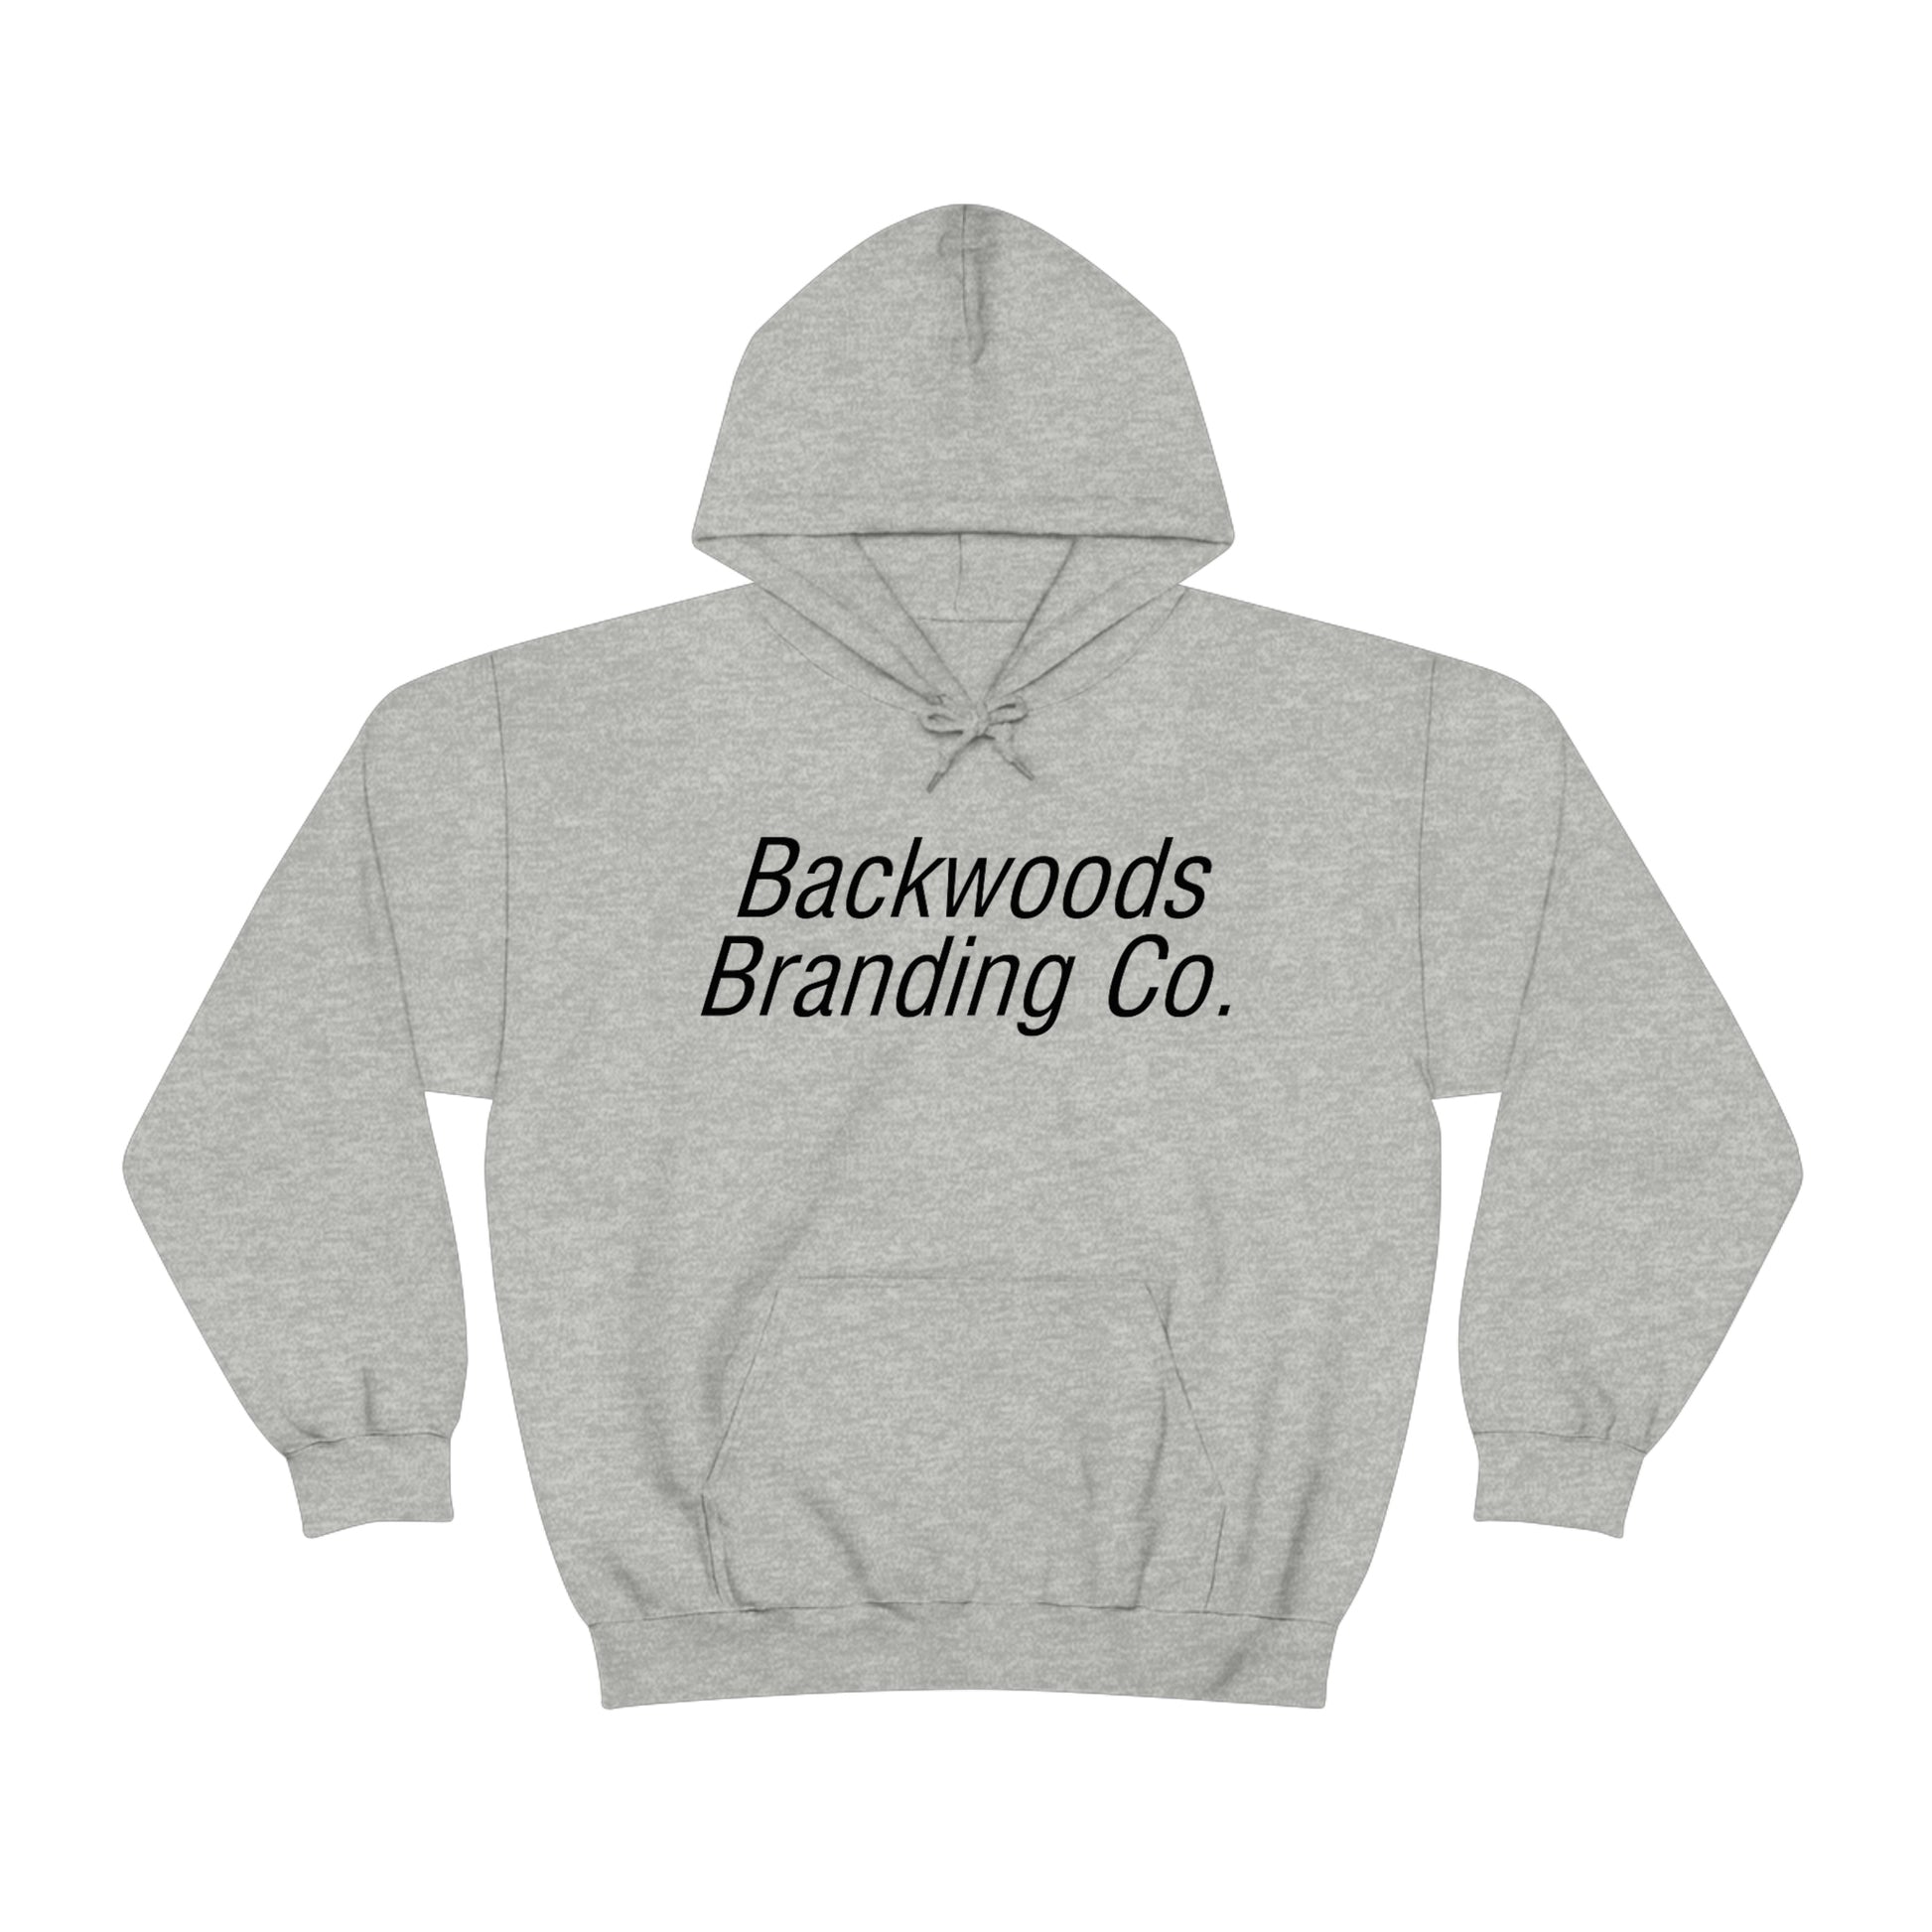 Backwoods Branding Hoodie - Backwoods Branding Co.